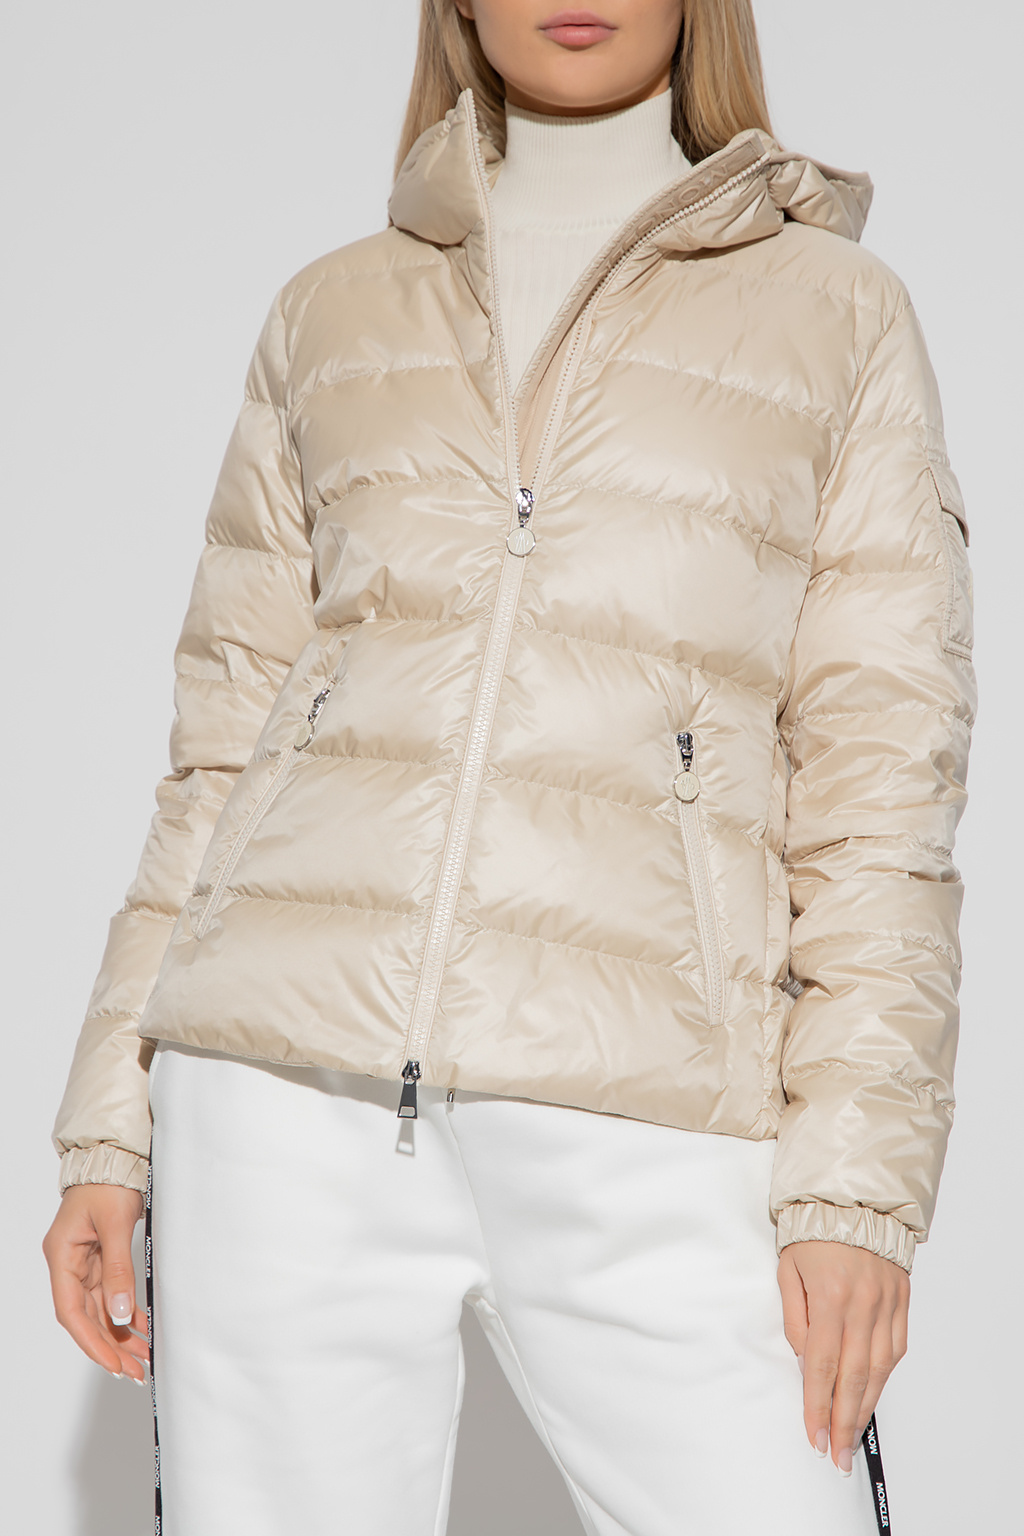 Moncler ‘Gles’ jacket | Women's Clothing | Vitkac